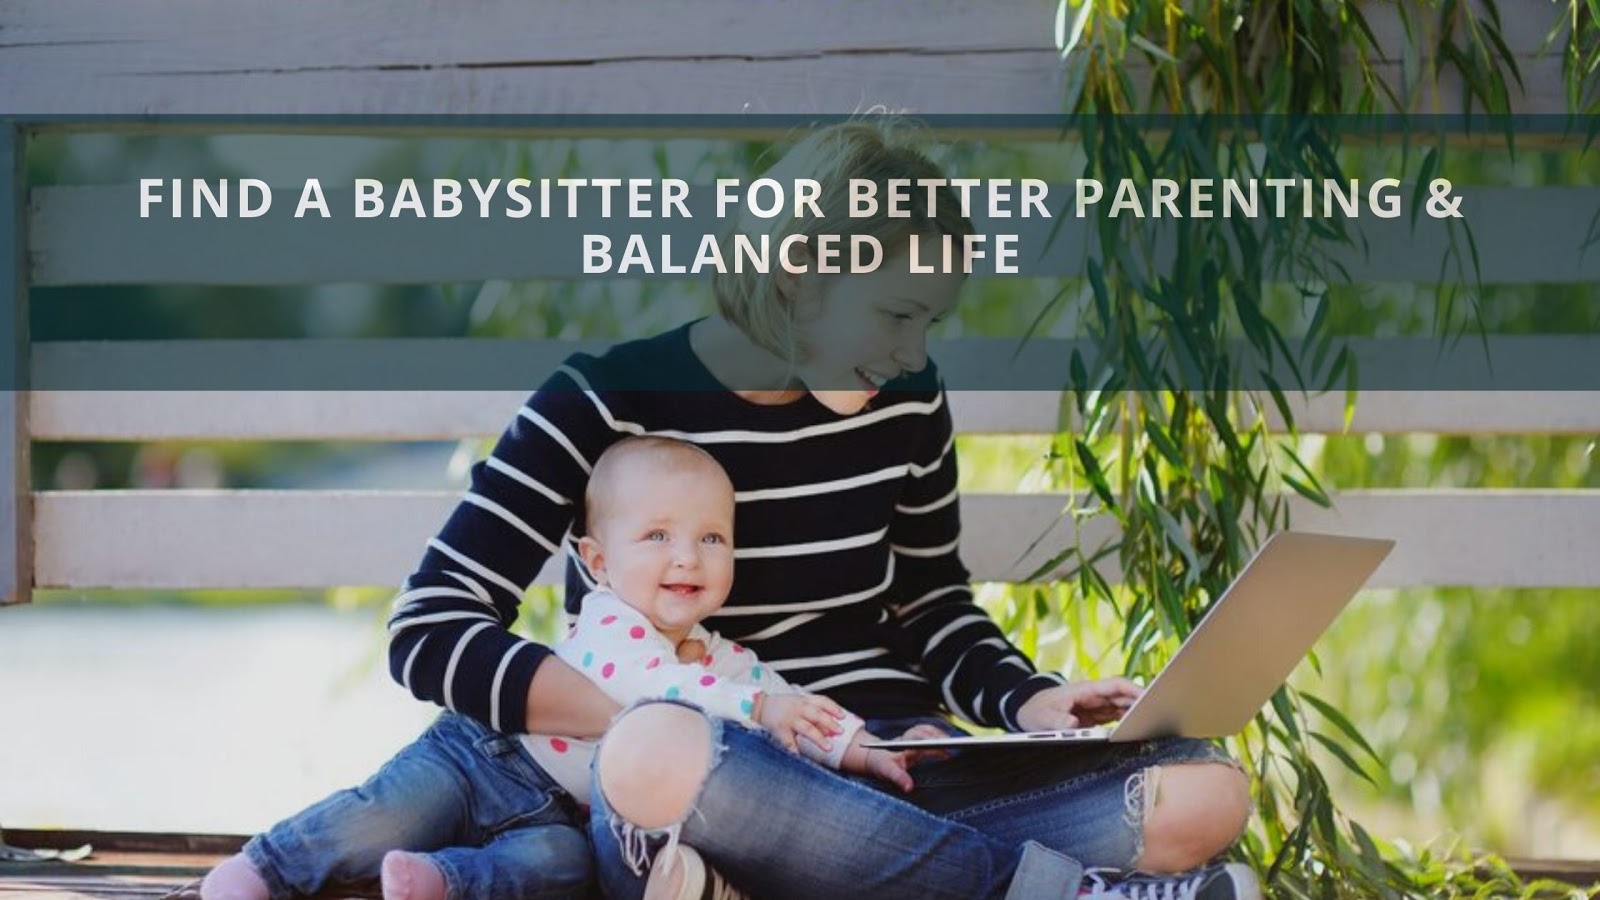 Find a Babysitter for Better Parenting & Balanced Life